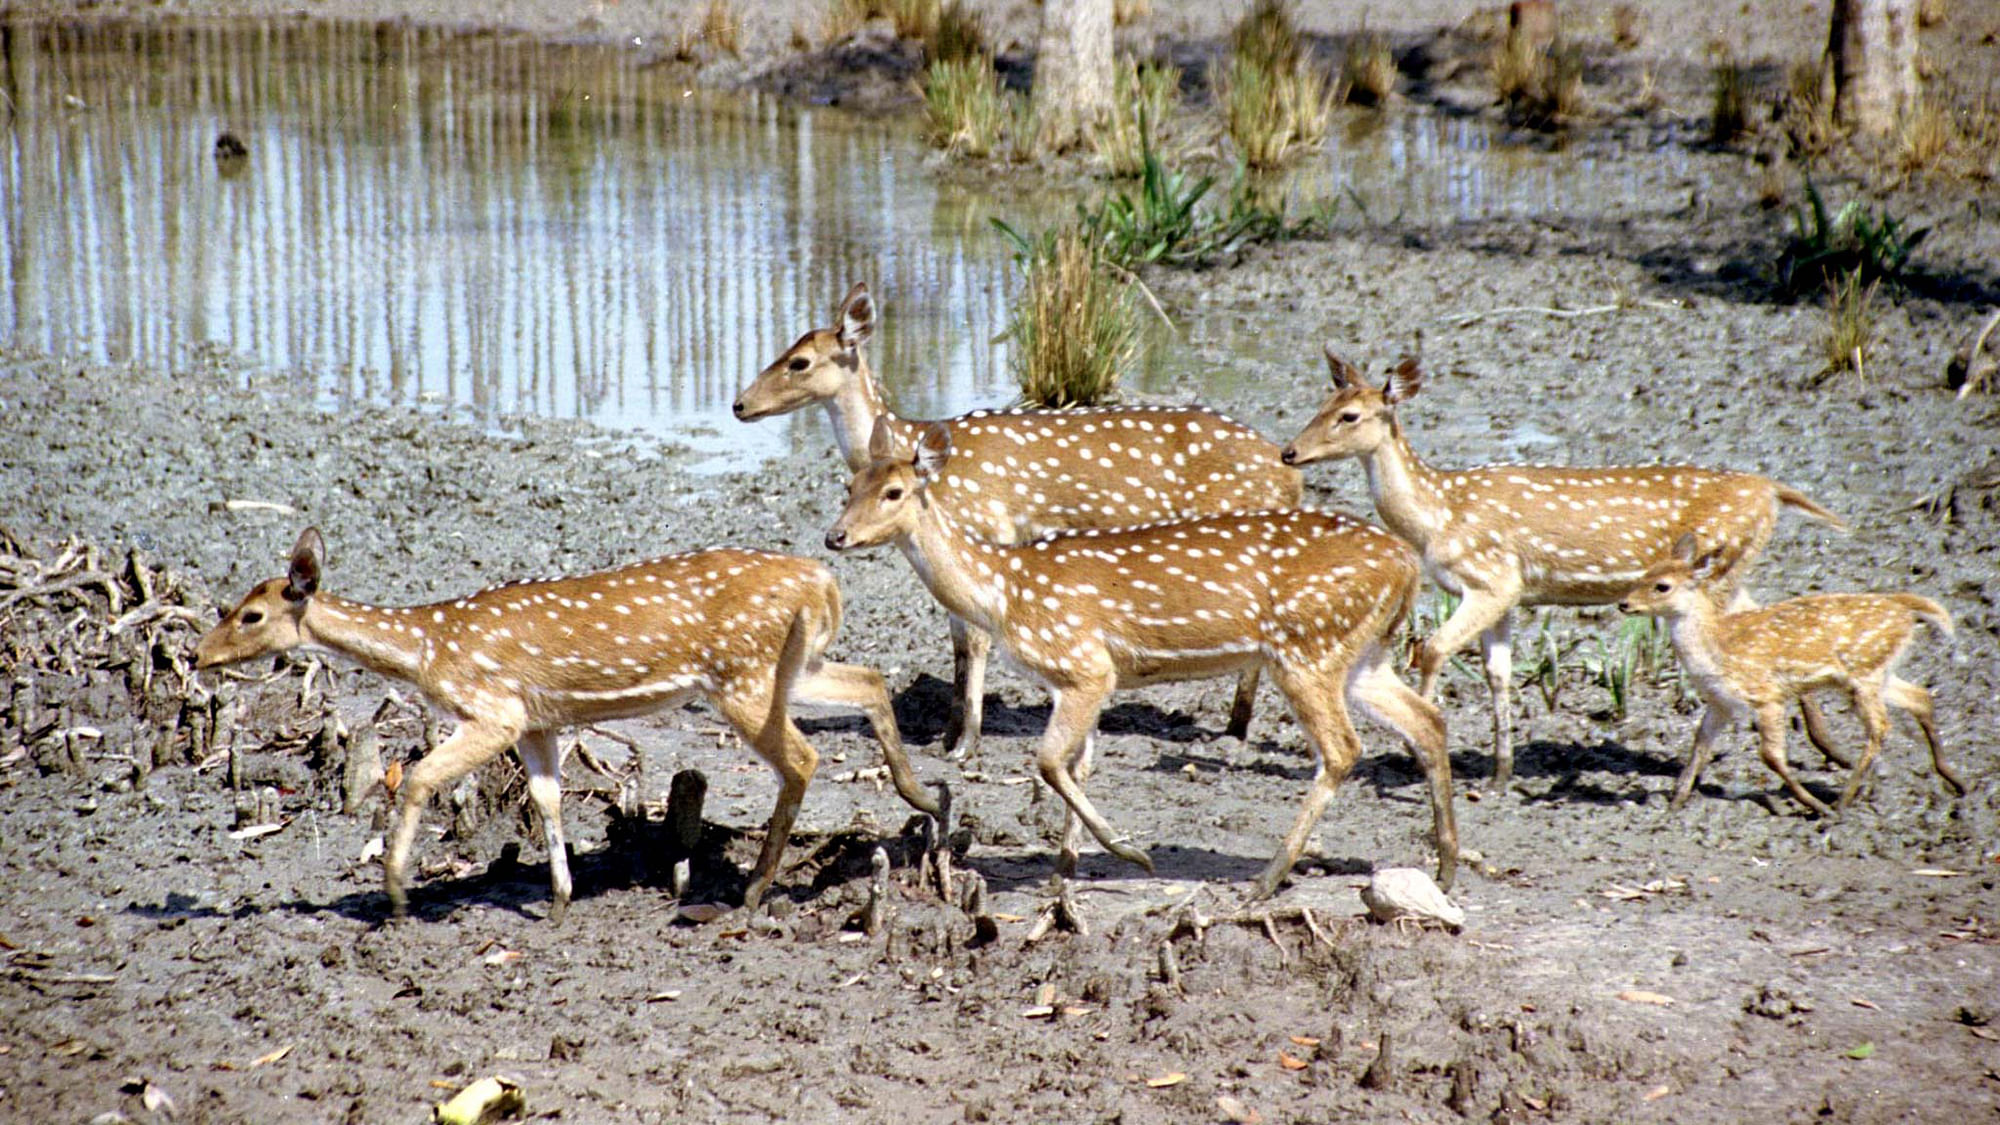  Spotted-deer on the fringe of Sundarbans, the world’slargest mangrove forest along Bangladesh’s southwest coast.&nbsp;